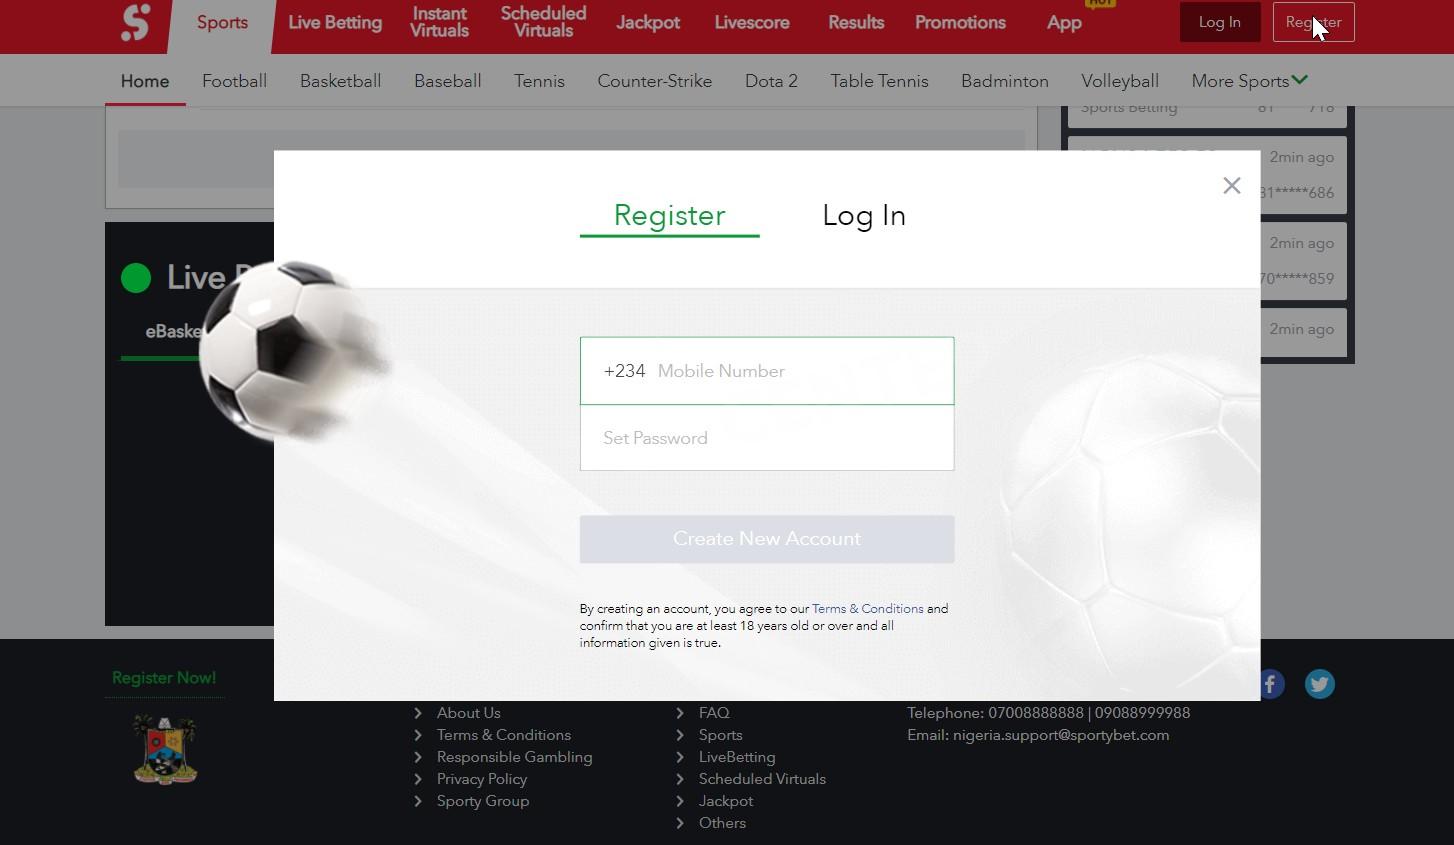 The SportyBet registration form